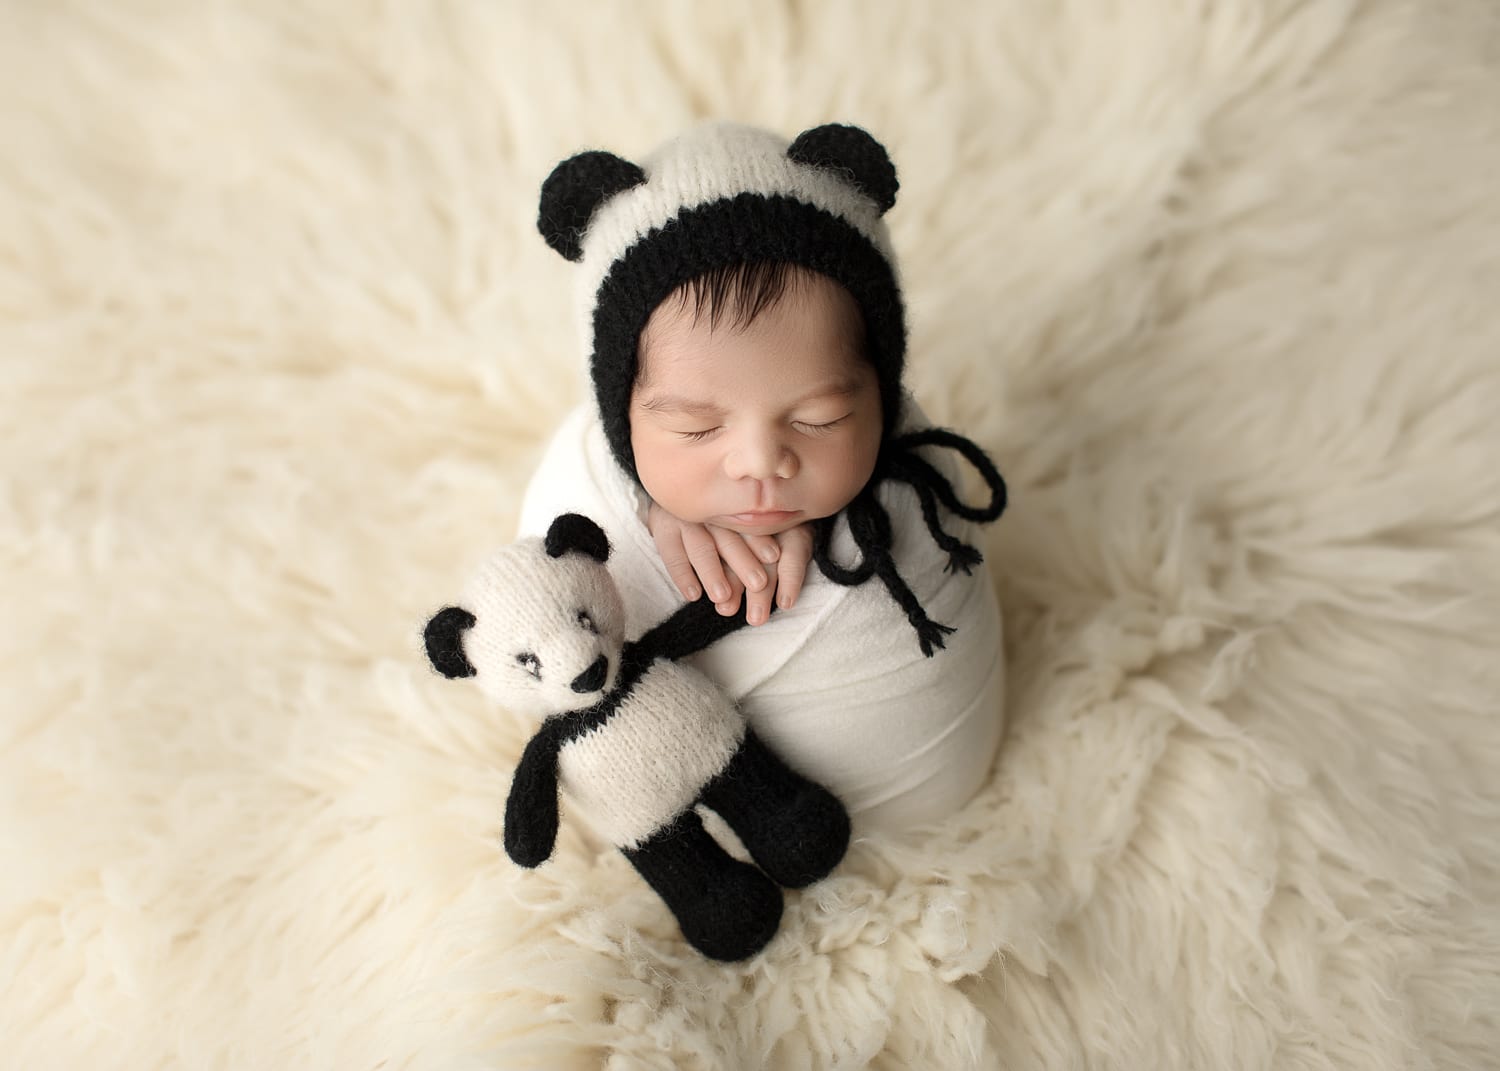 Portland Newborn Photographer Baby in Potato Sack pose holding panda